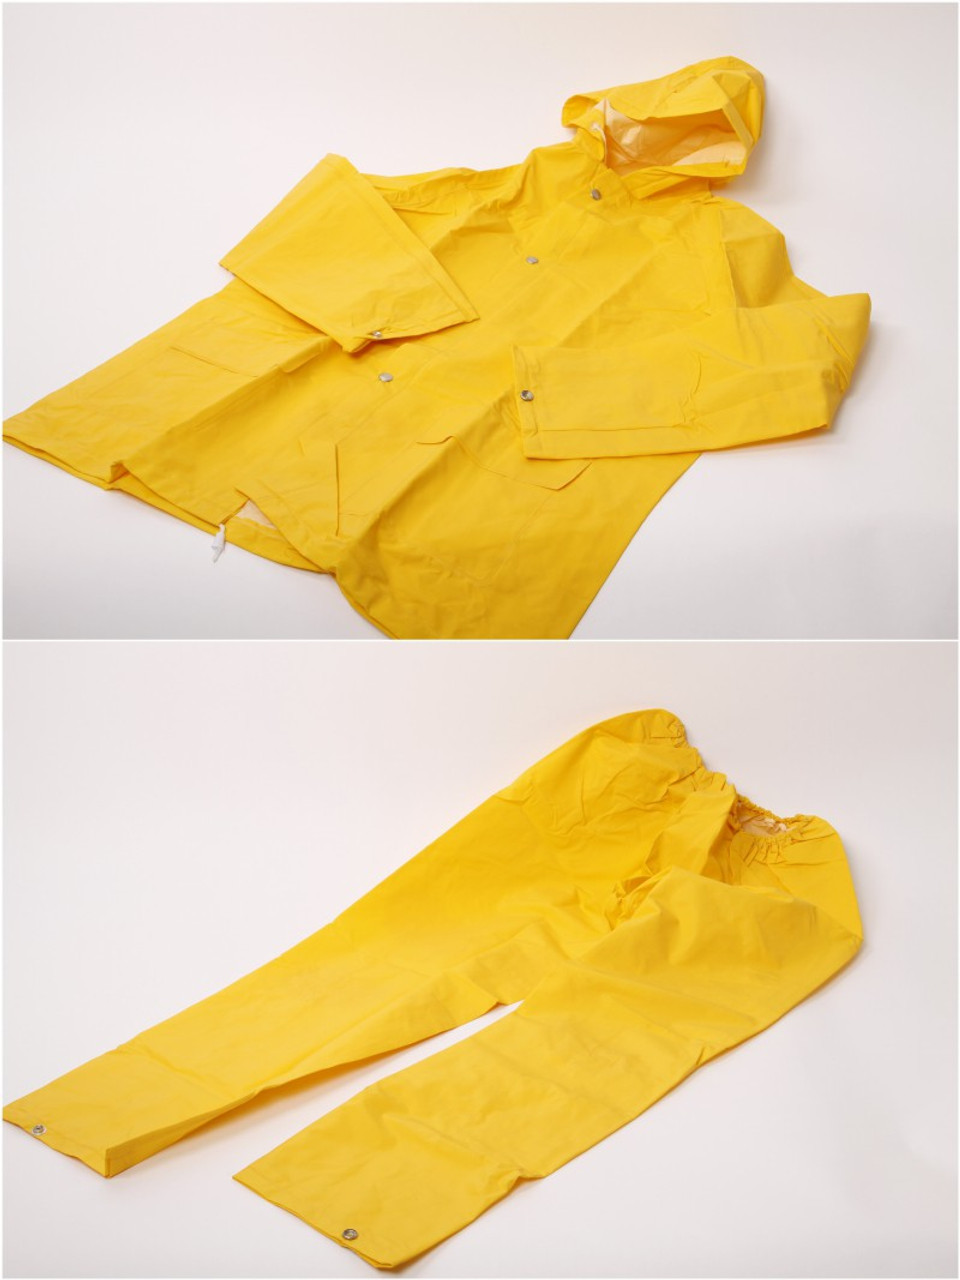 IMPA 190439 Rain suit with hood